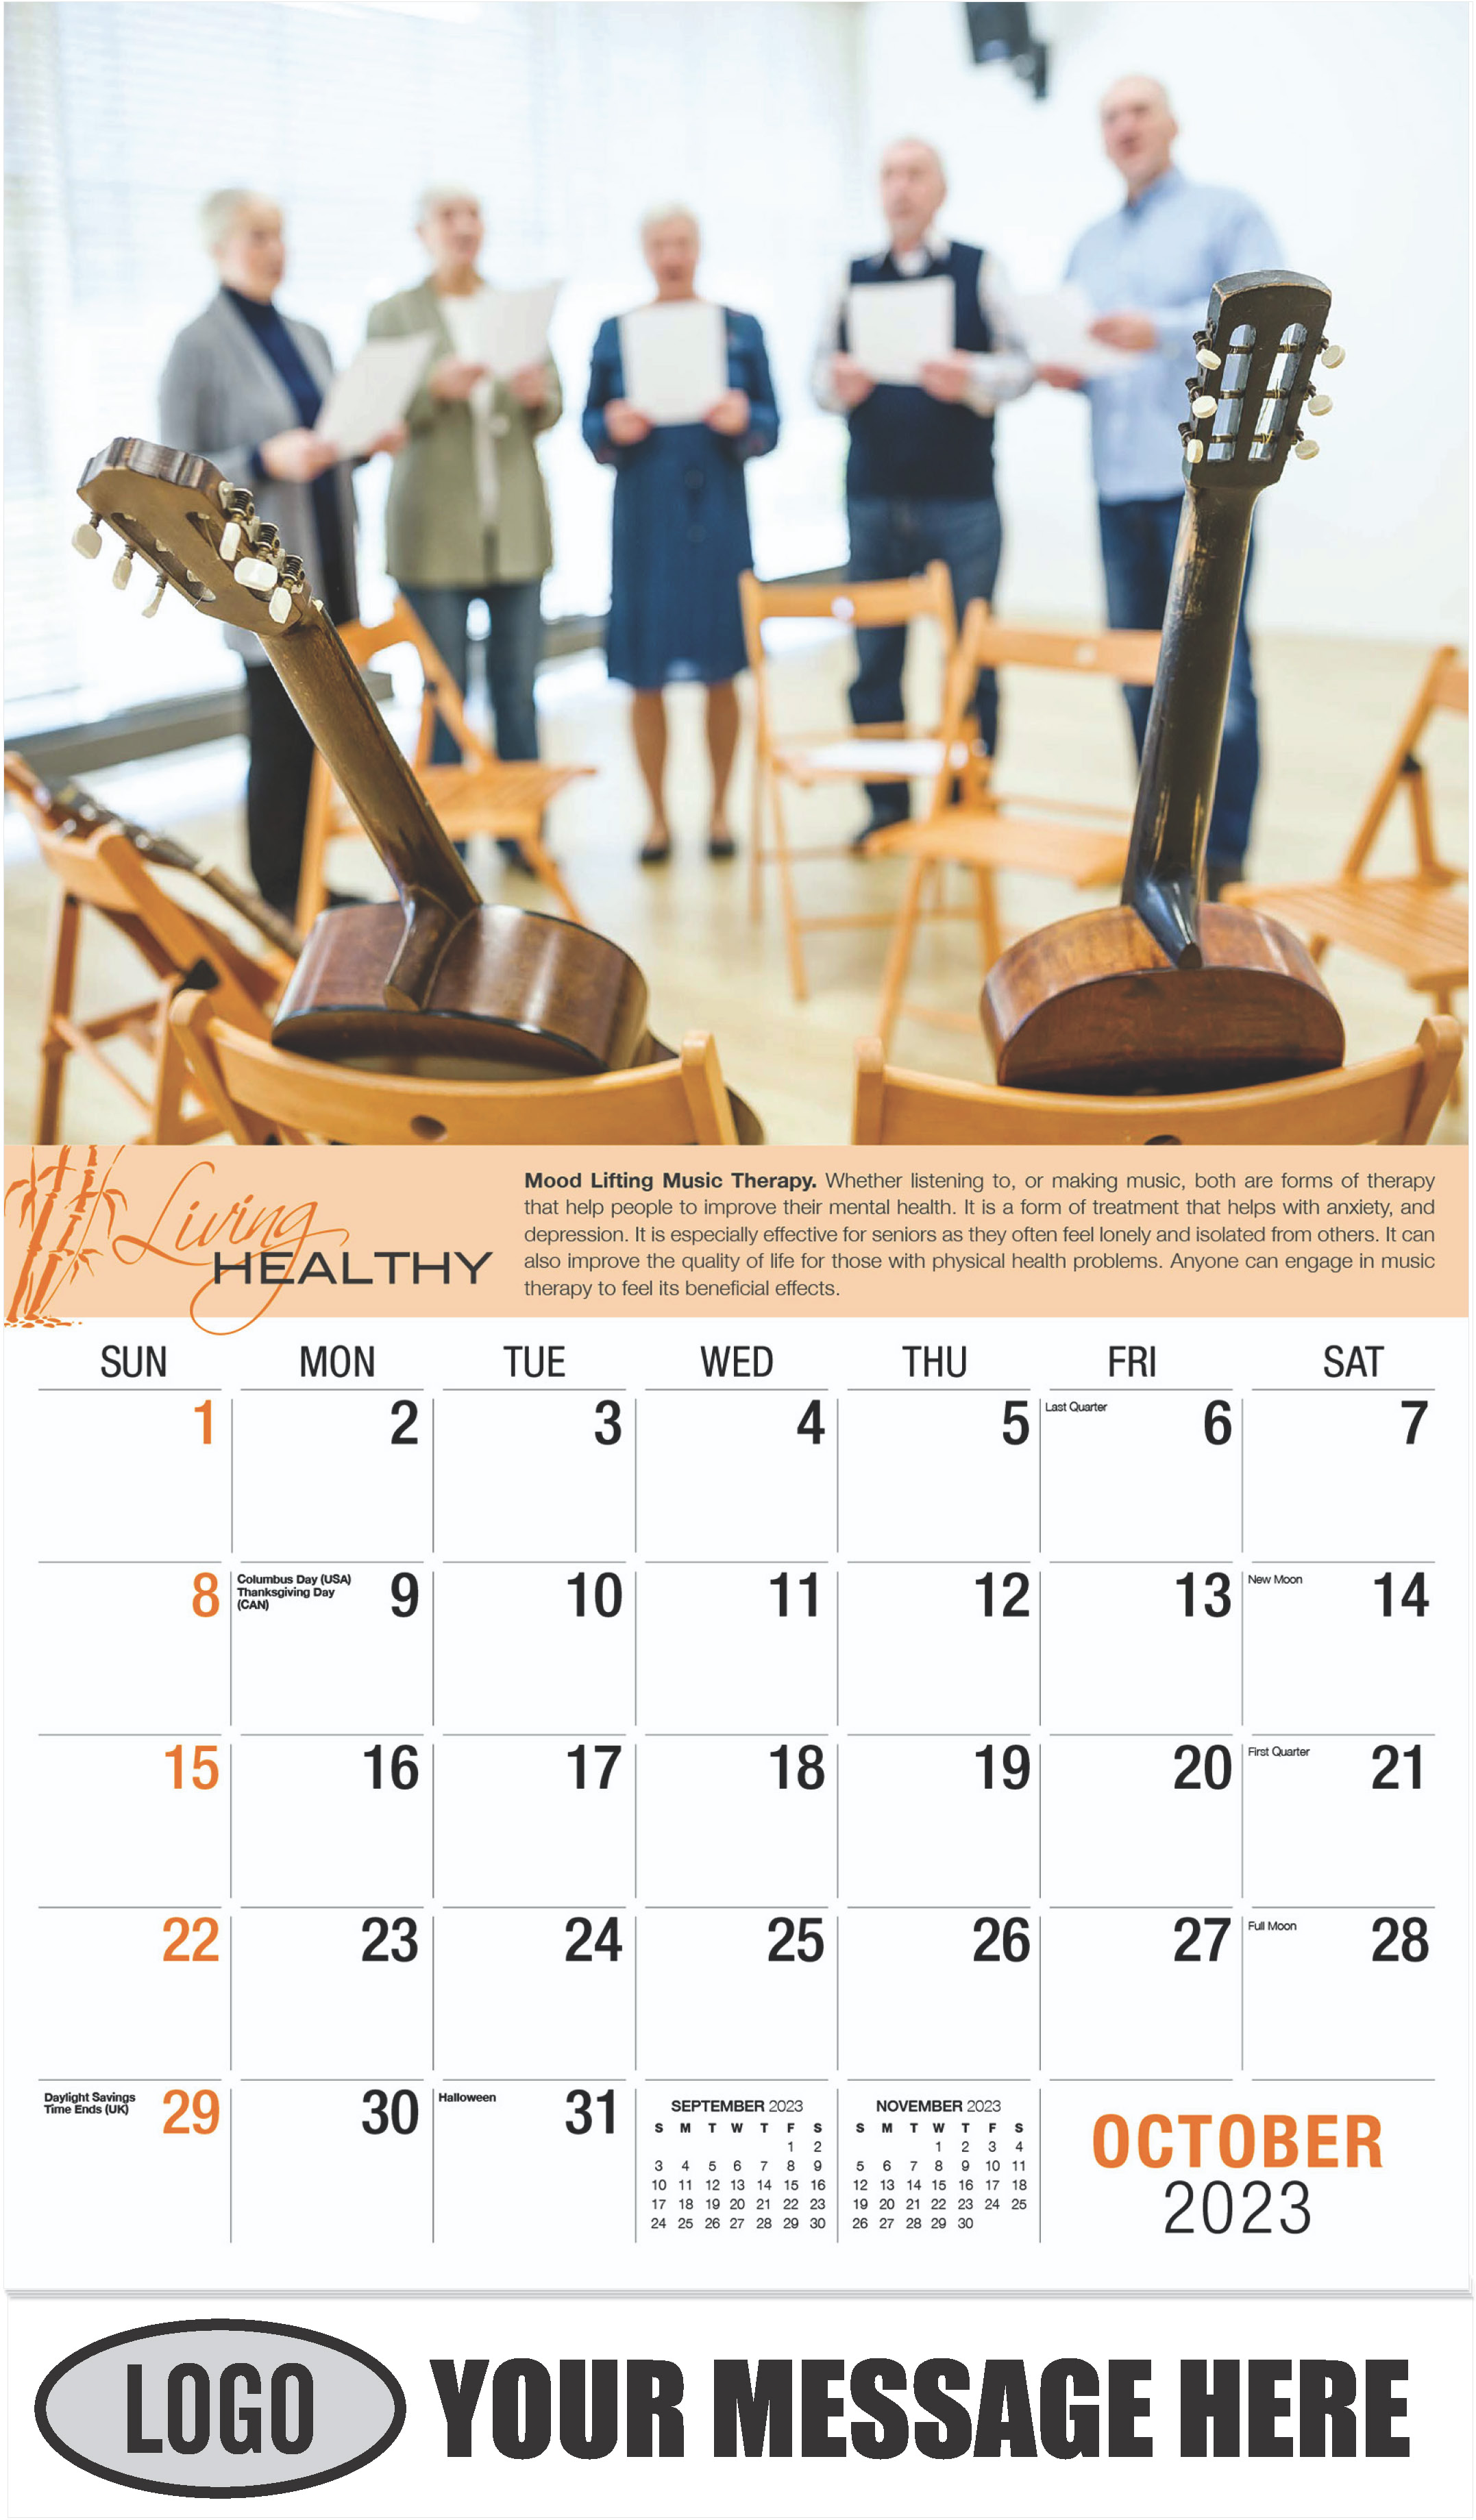 Seniors - October - Living Healthy 2023 Promotional Calendar